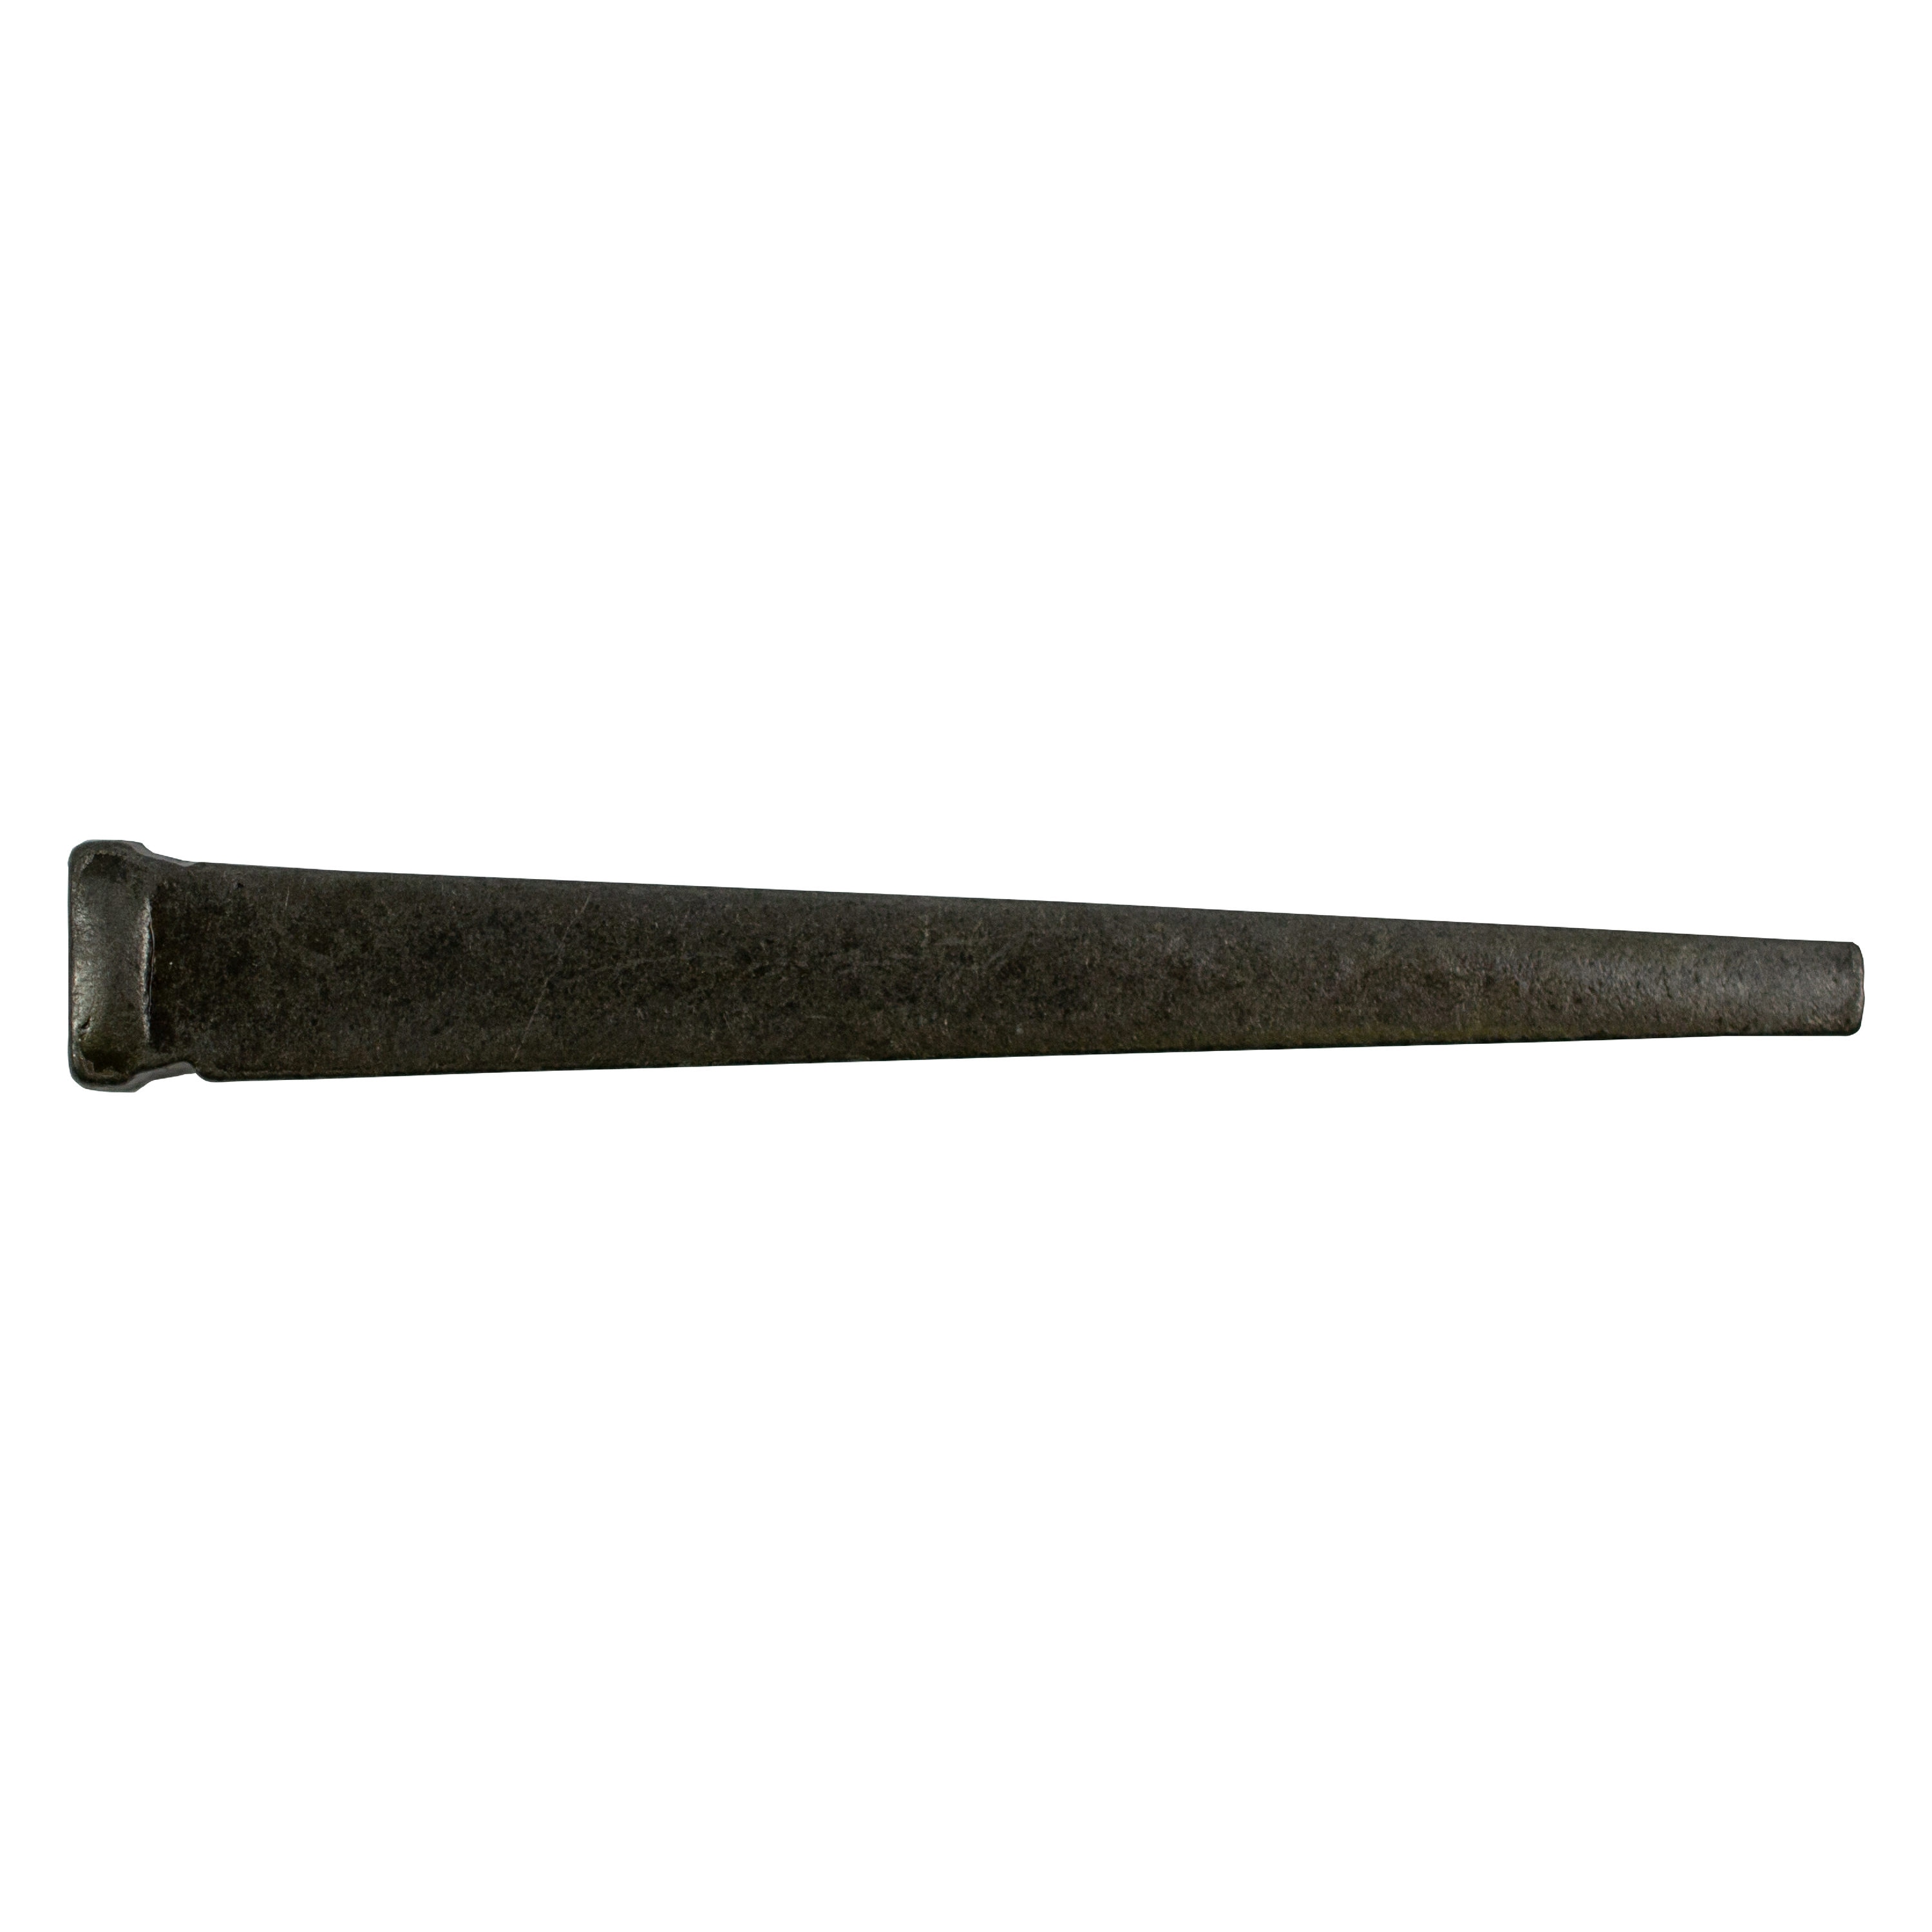 75mm BRIGHT CUT CLASP STEEL NAILS DOOR FRAME NAILS MASONRY NAIL WINDOW 